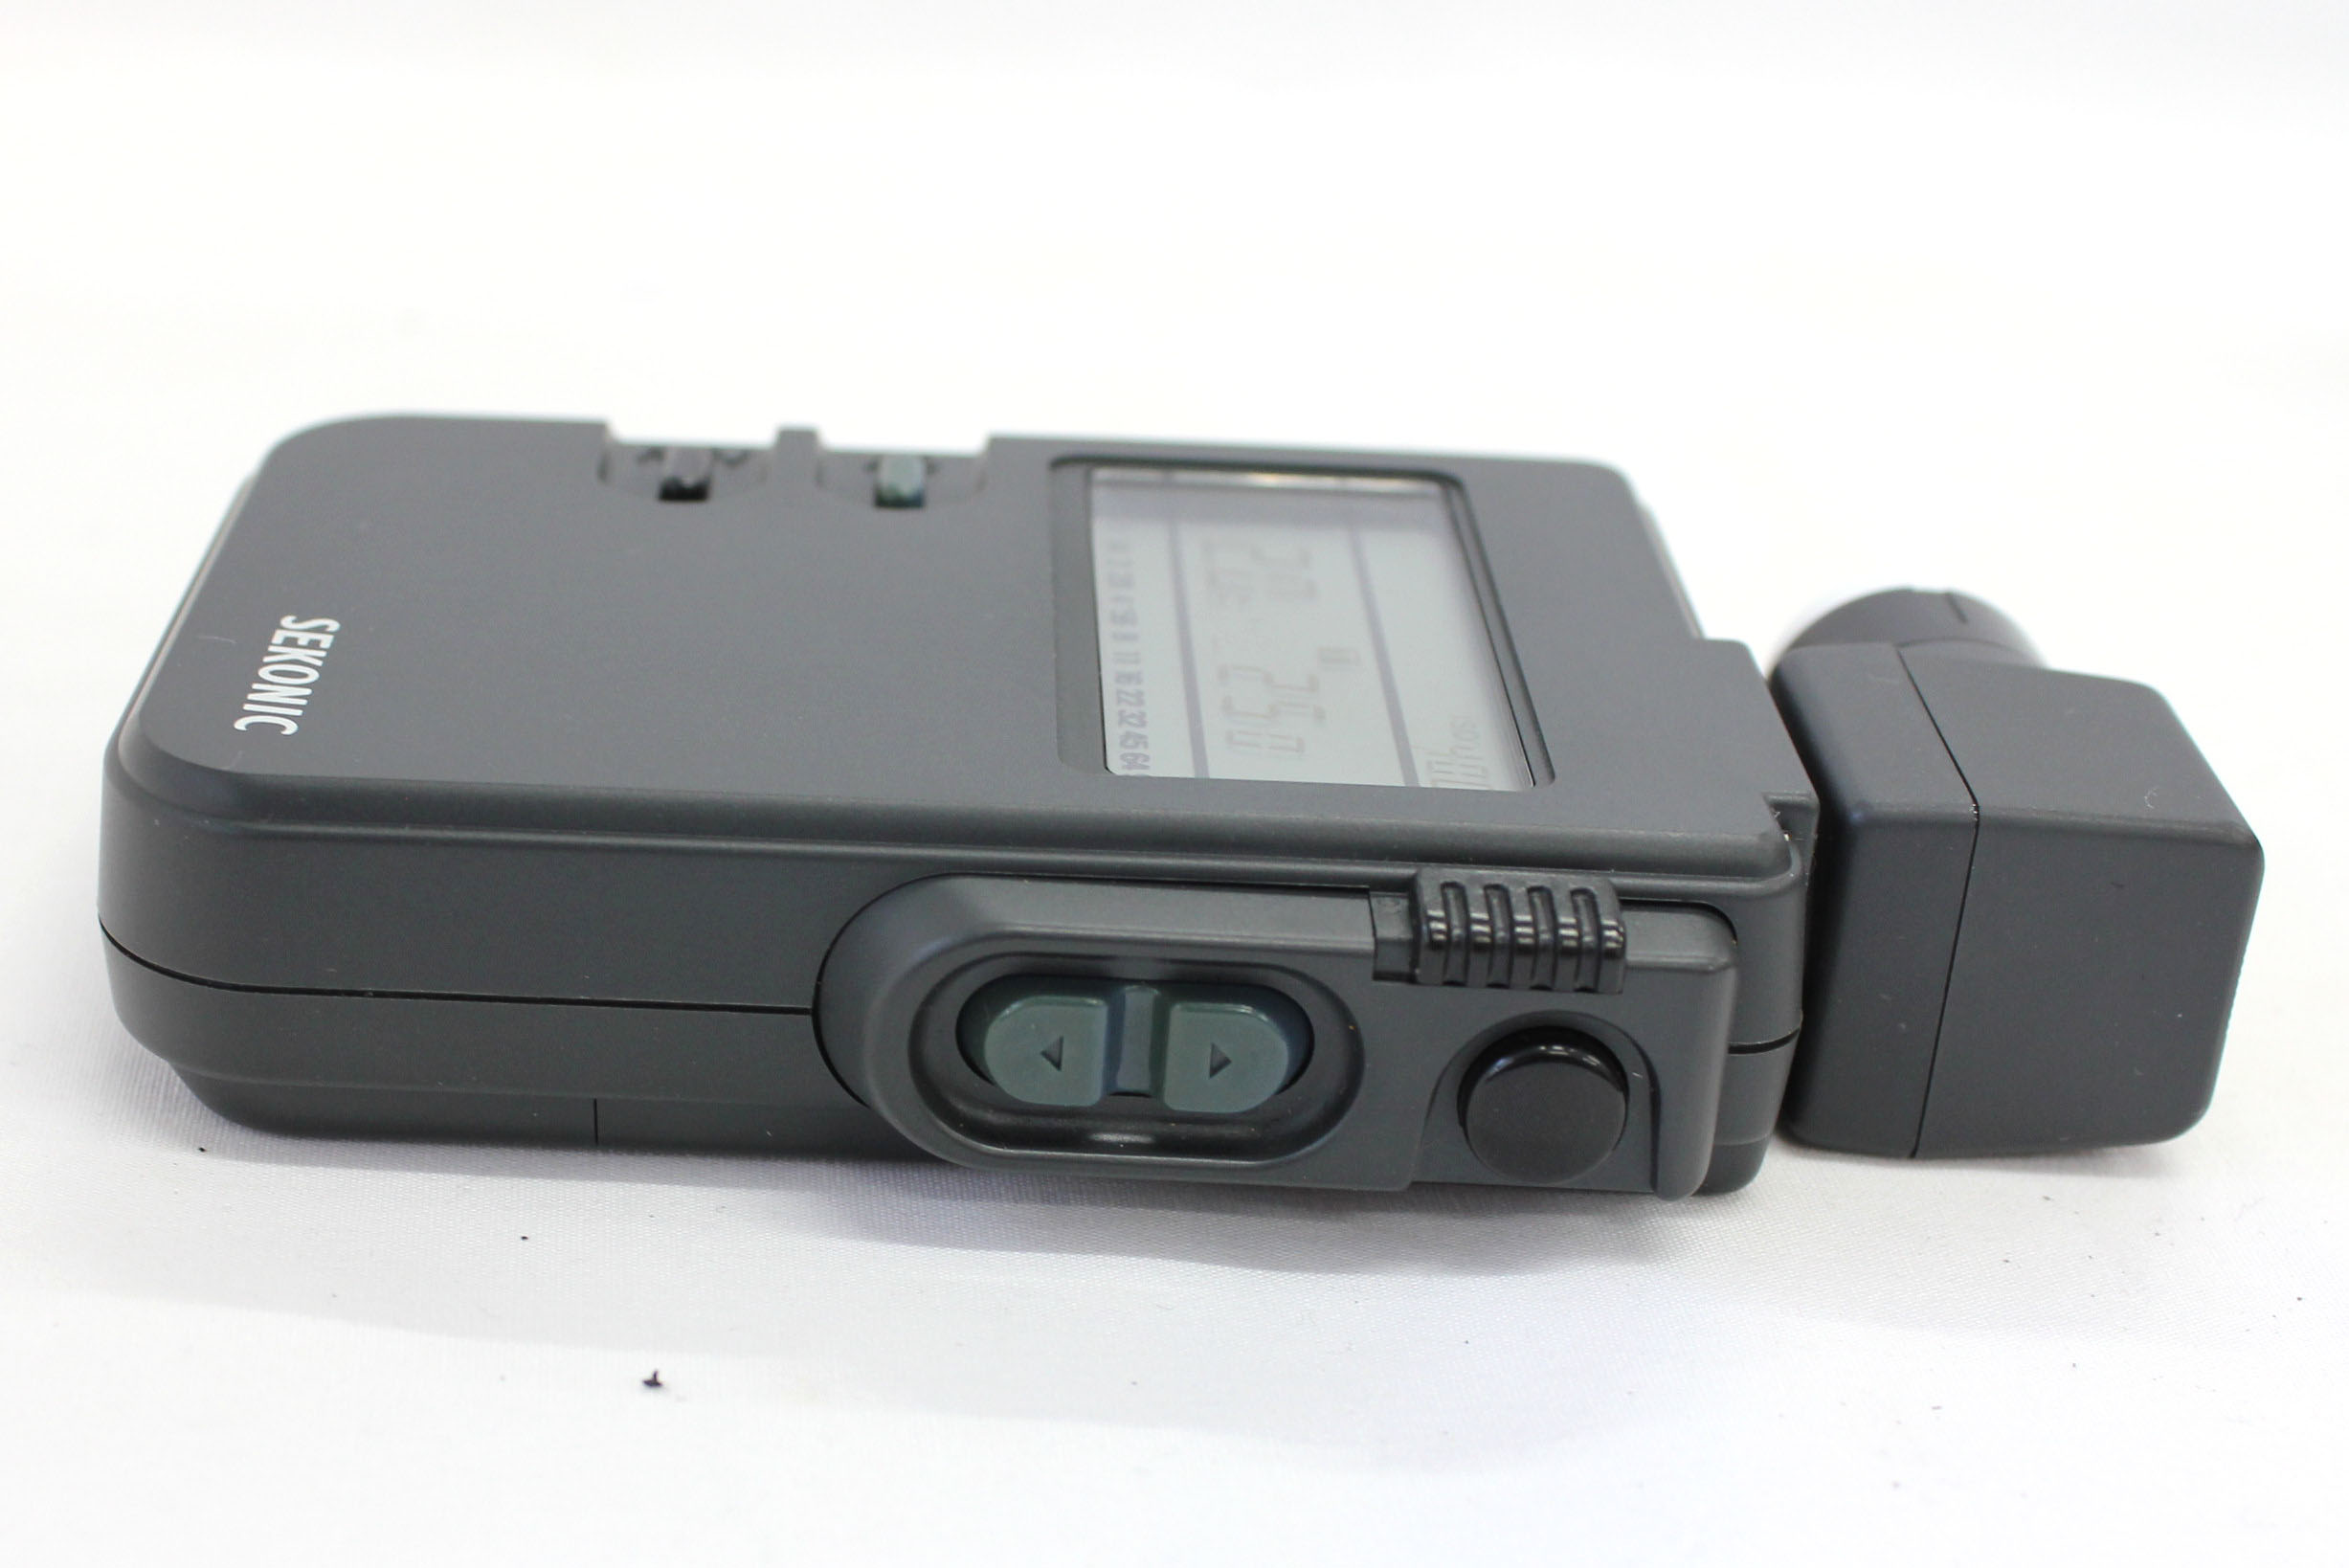  Sekonic Digi Lite Model L-318 Digital Lite Meter with Case from Japan Photo 2